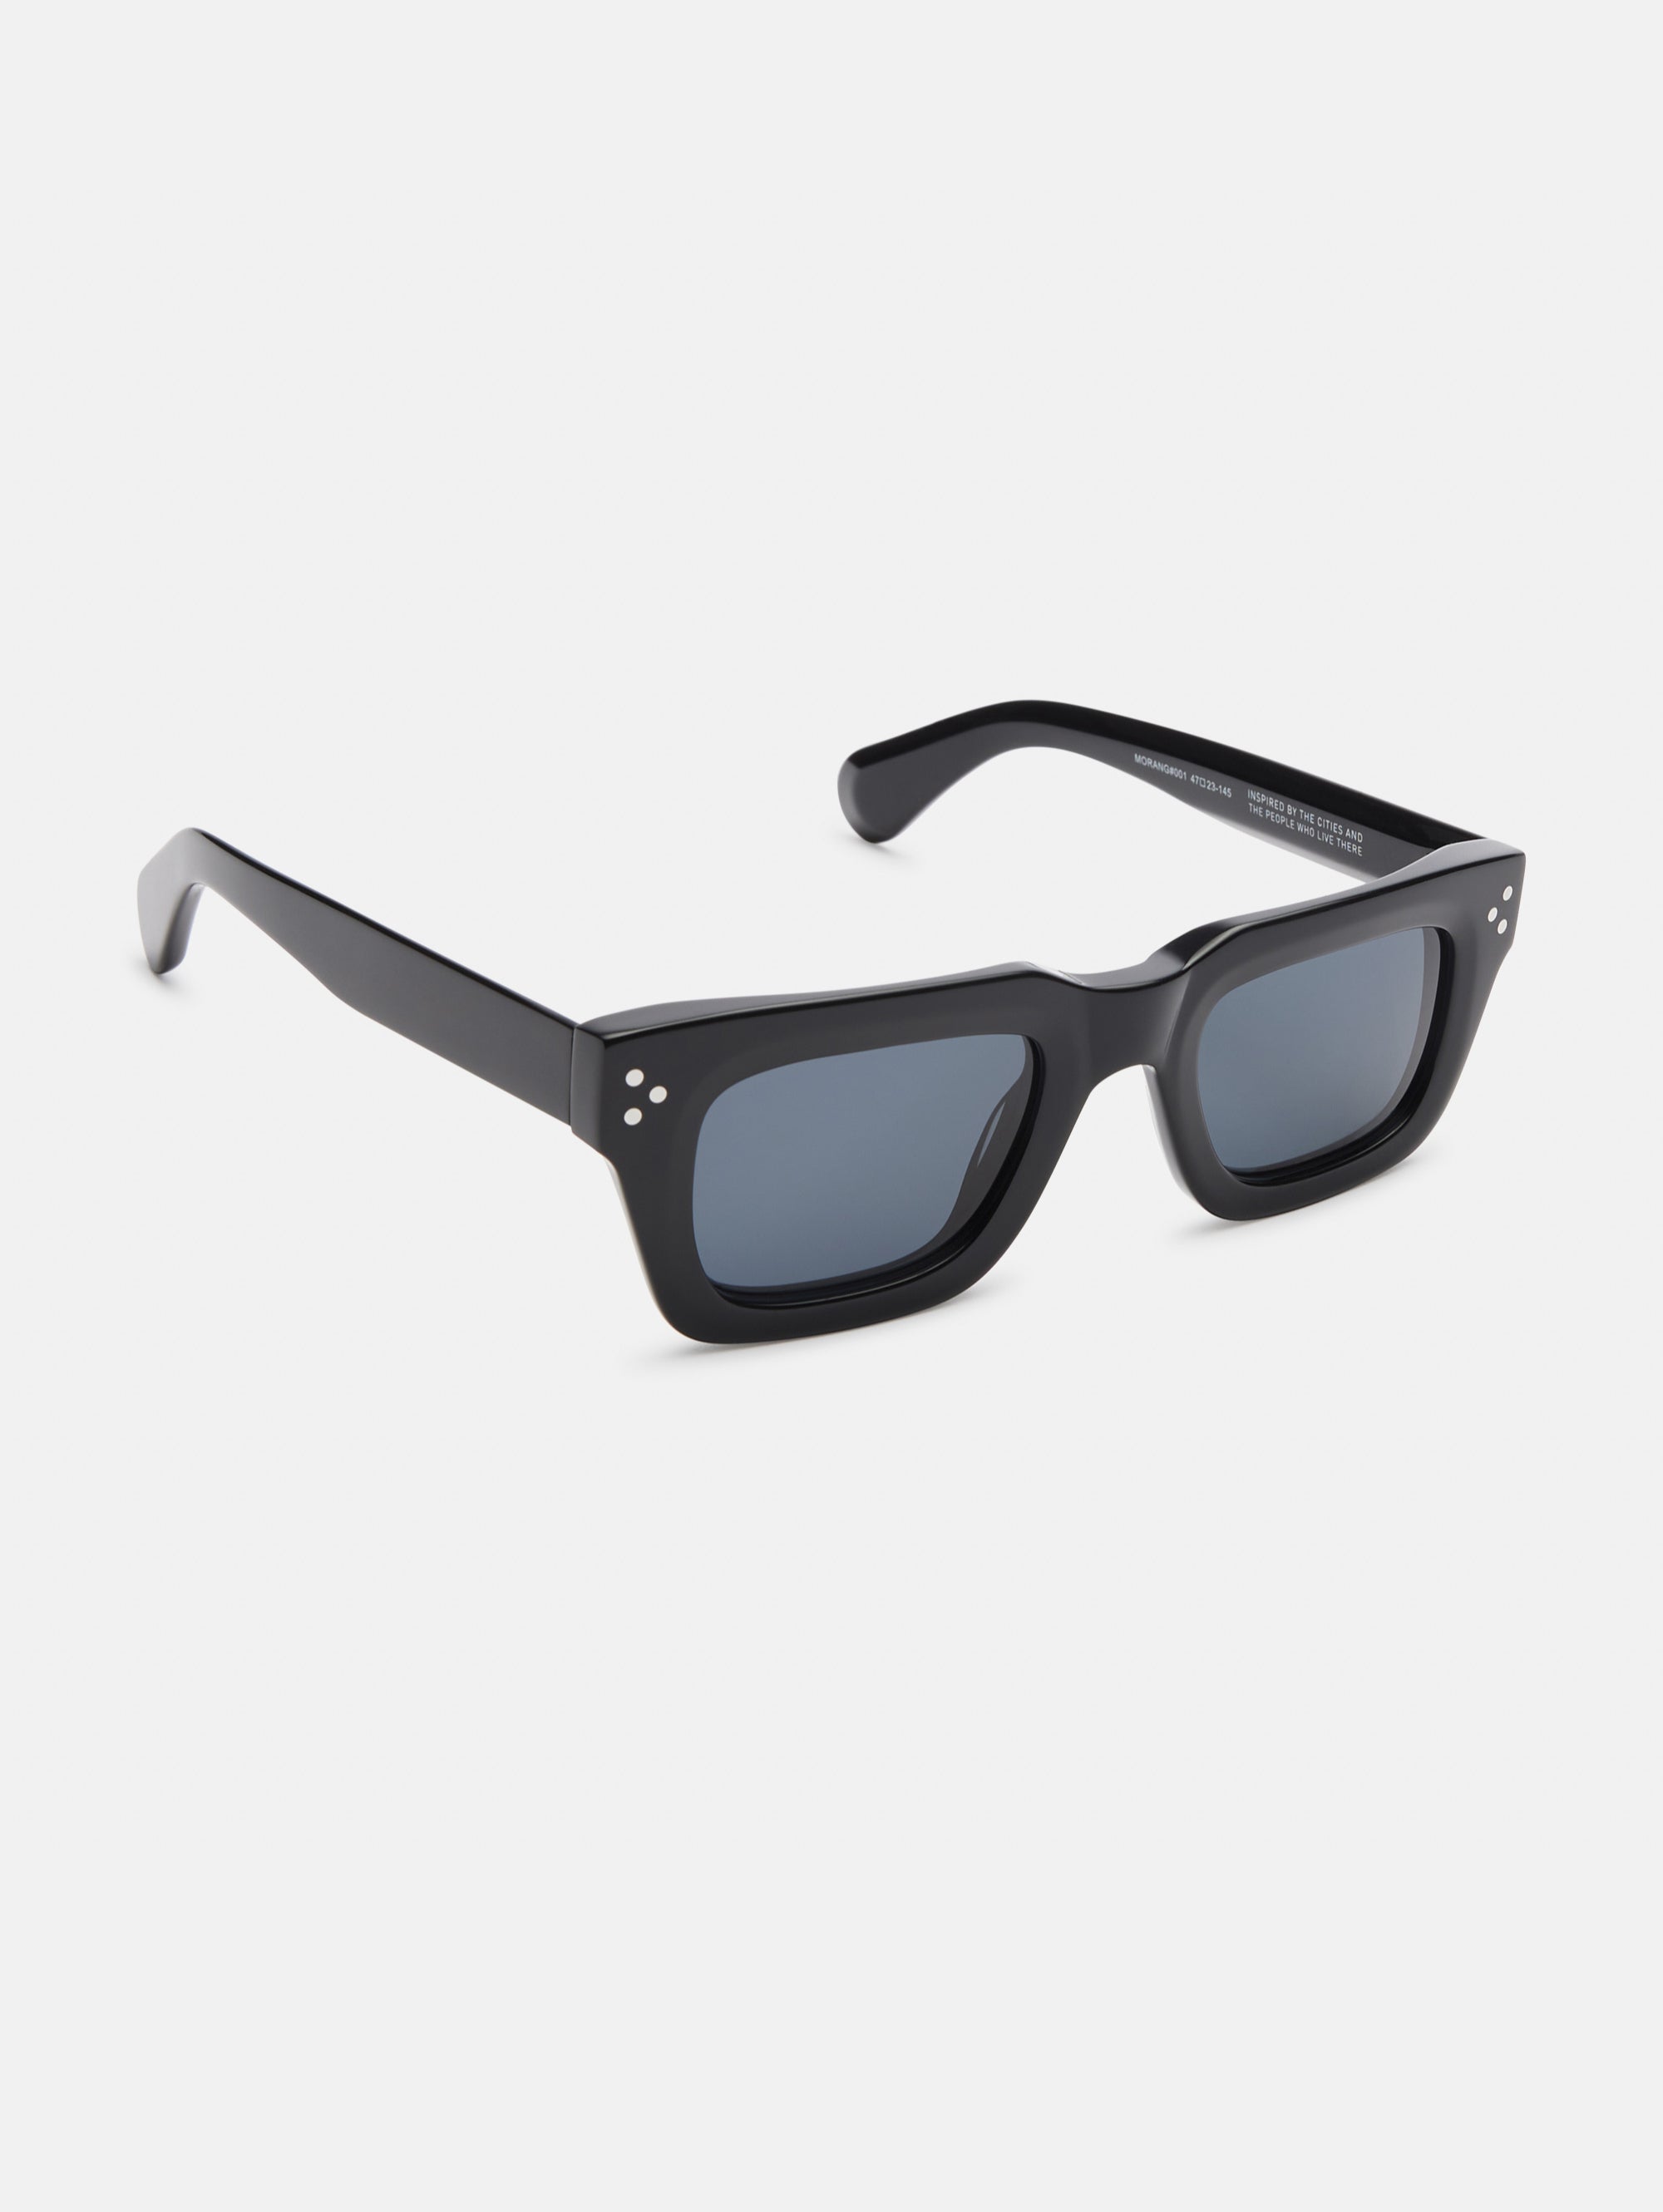 Morang Sunglasses Black